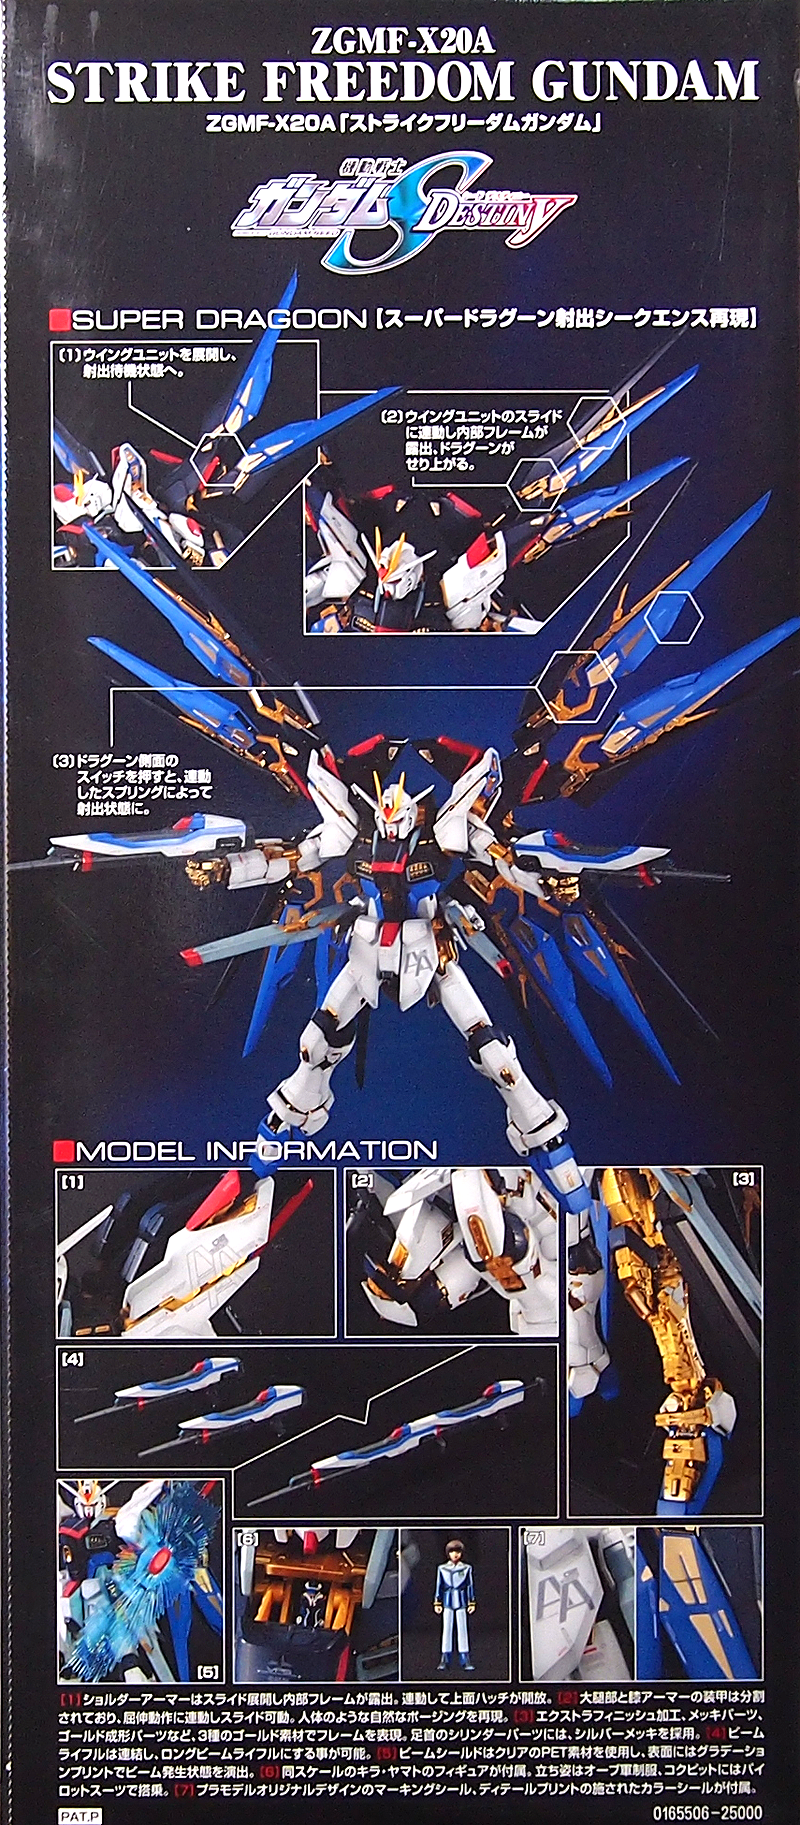 1/60 Perfect Grade Strike Freedom Gundam